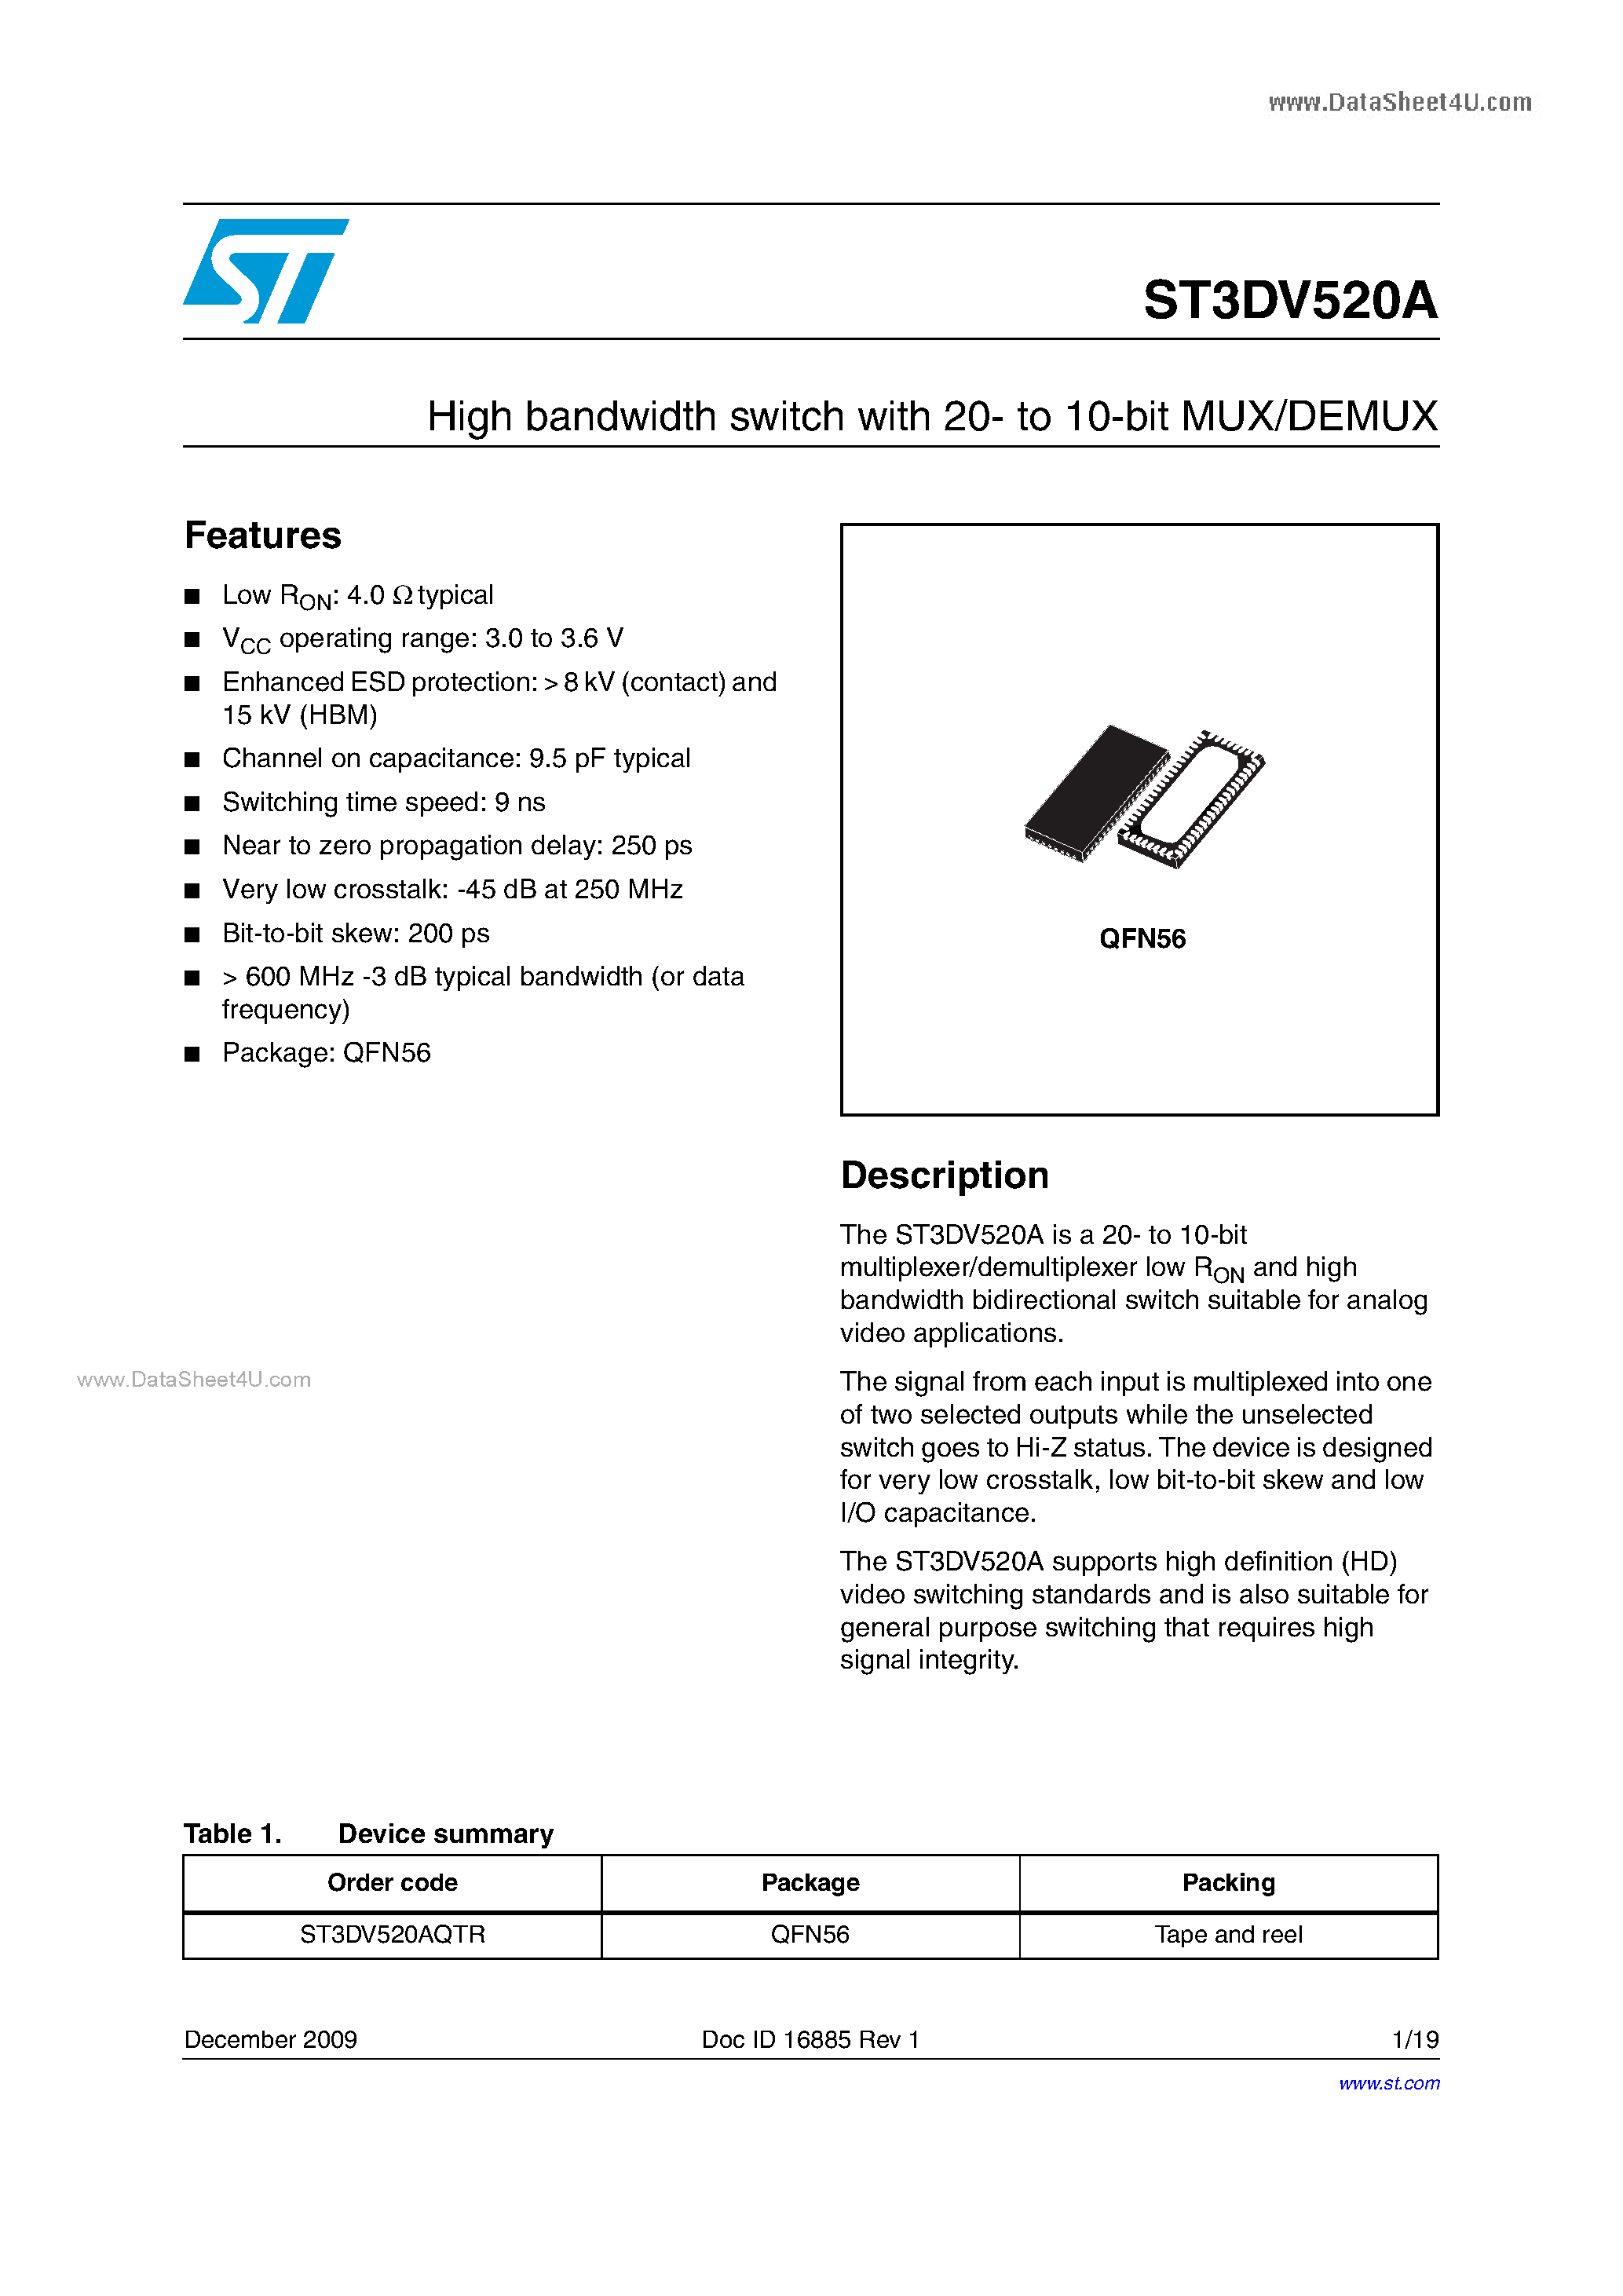 Datasheet ST3DV520A - High Bandwidth Switch page 1